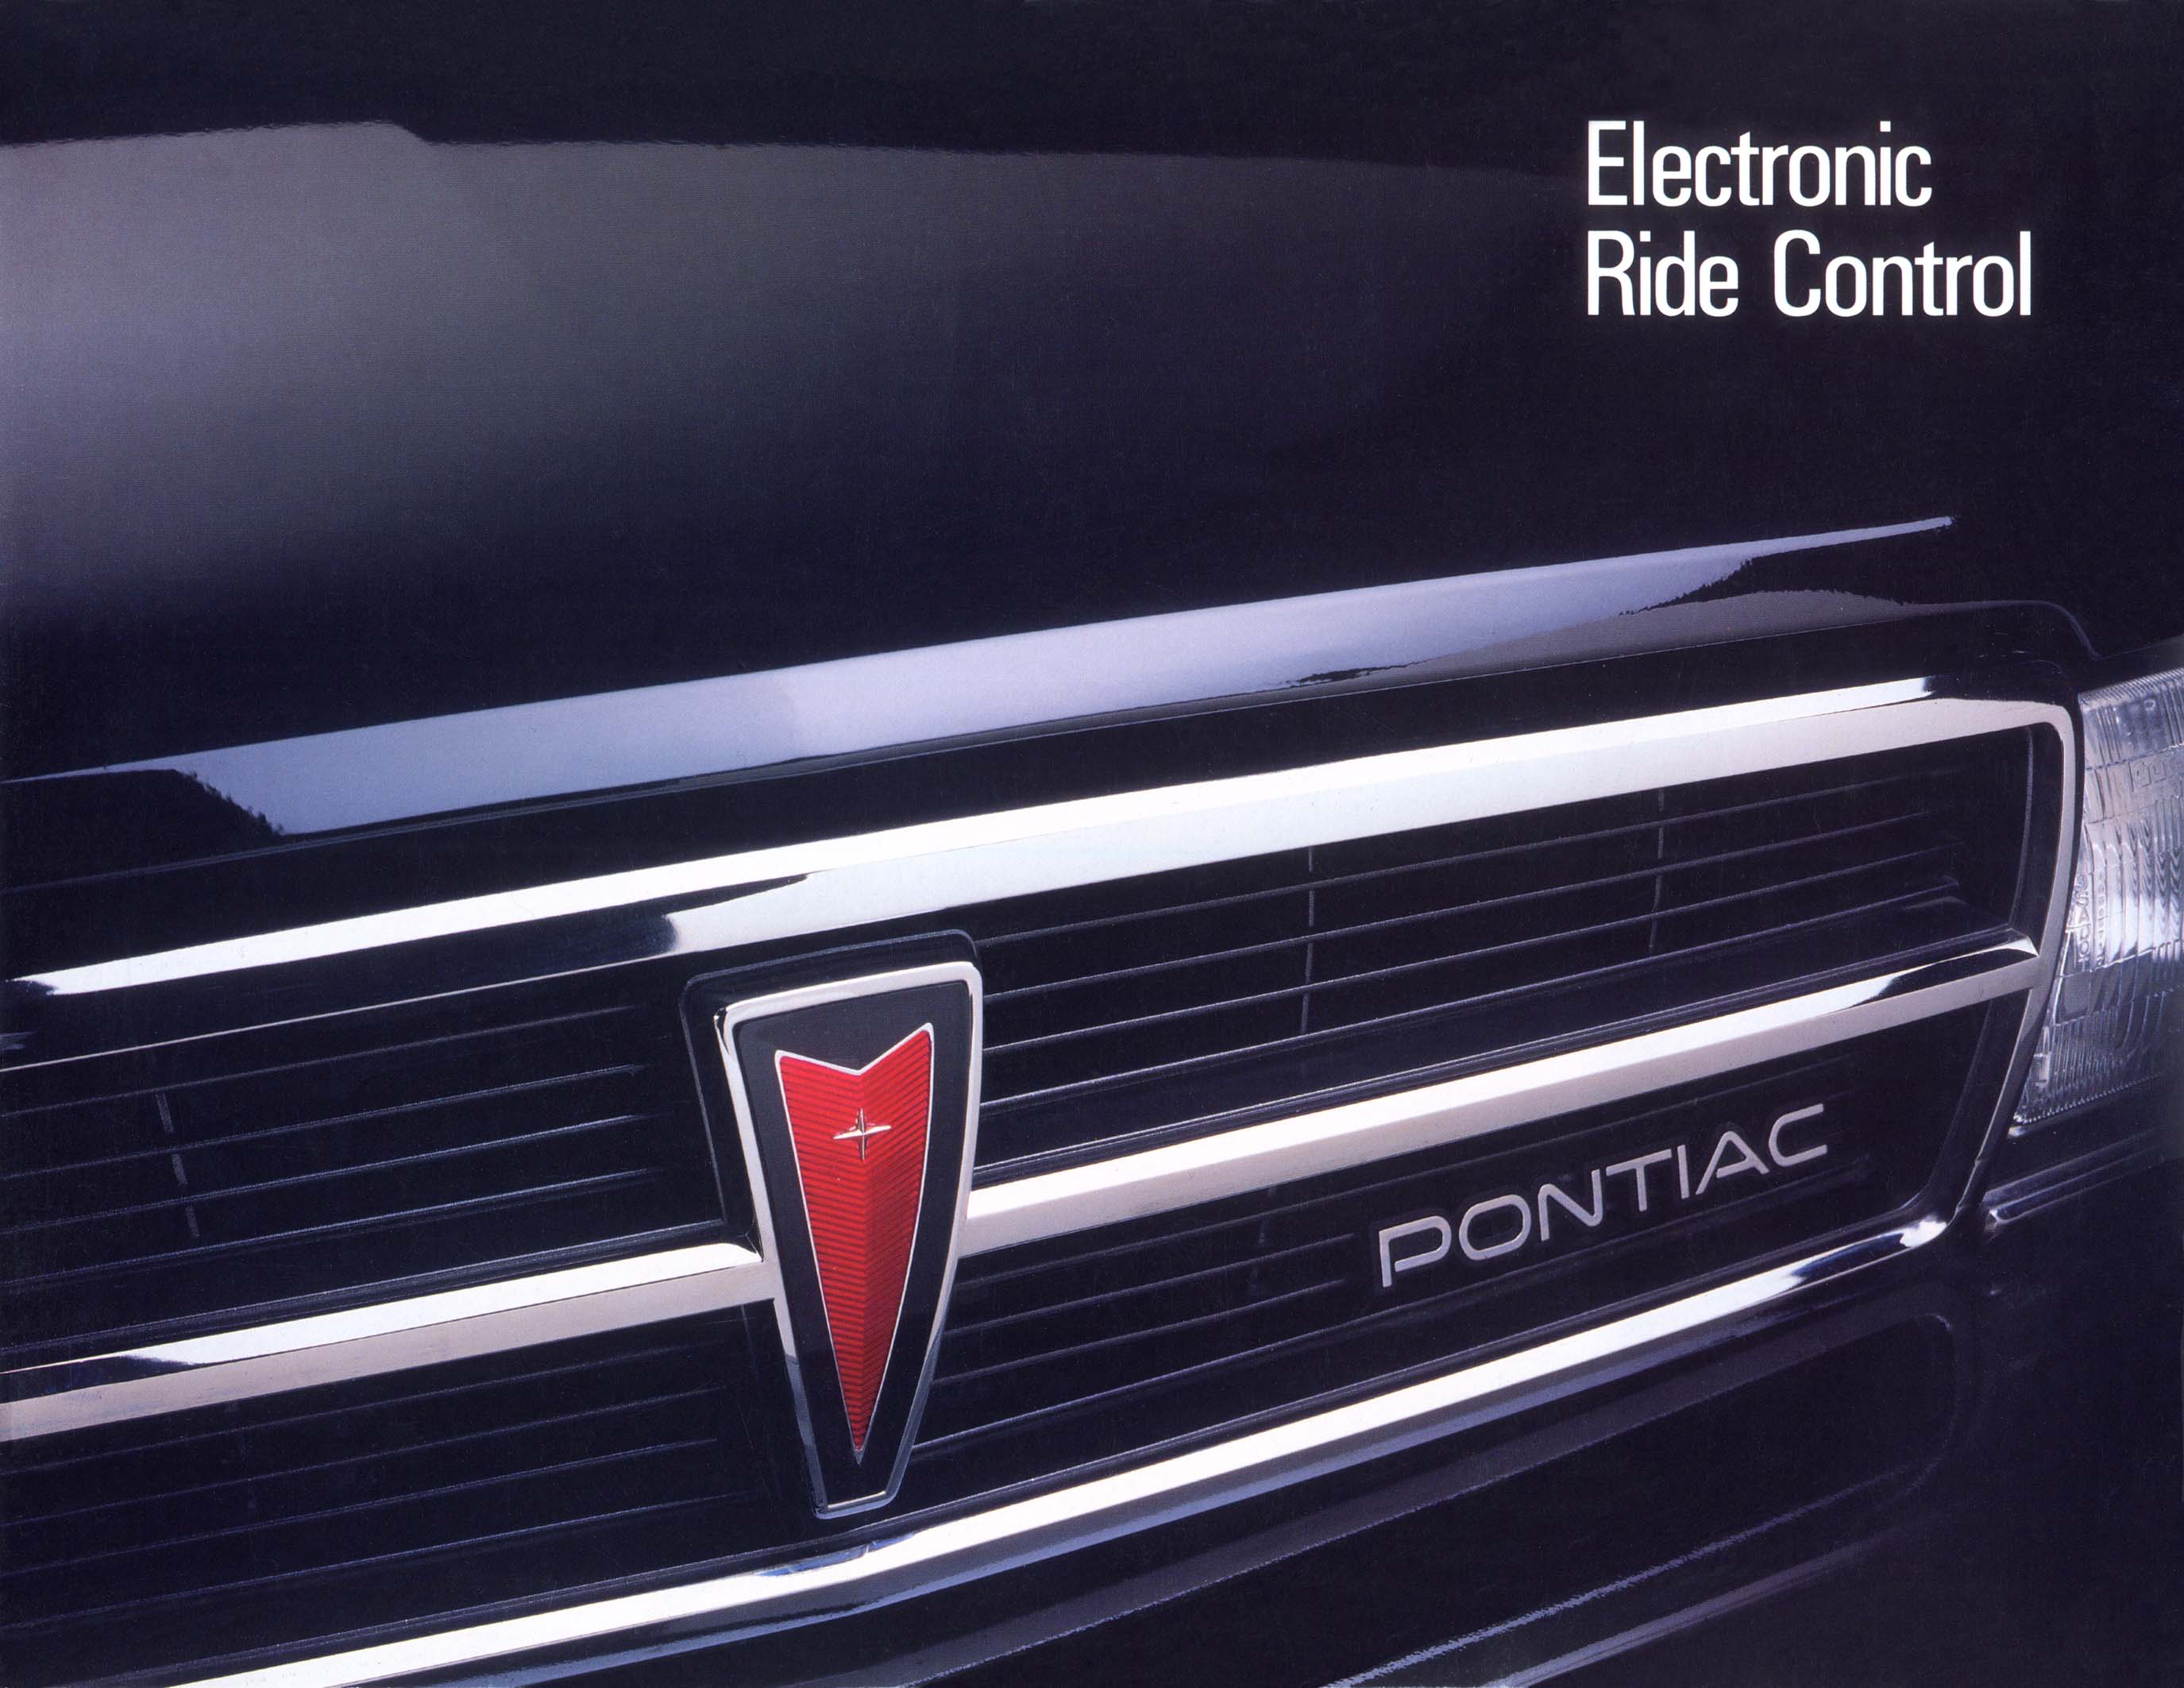 1987_Pontiac_Electonic_Ride_Control-01